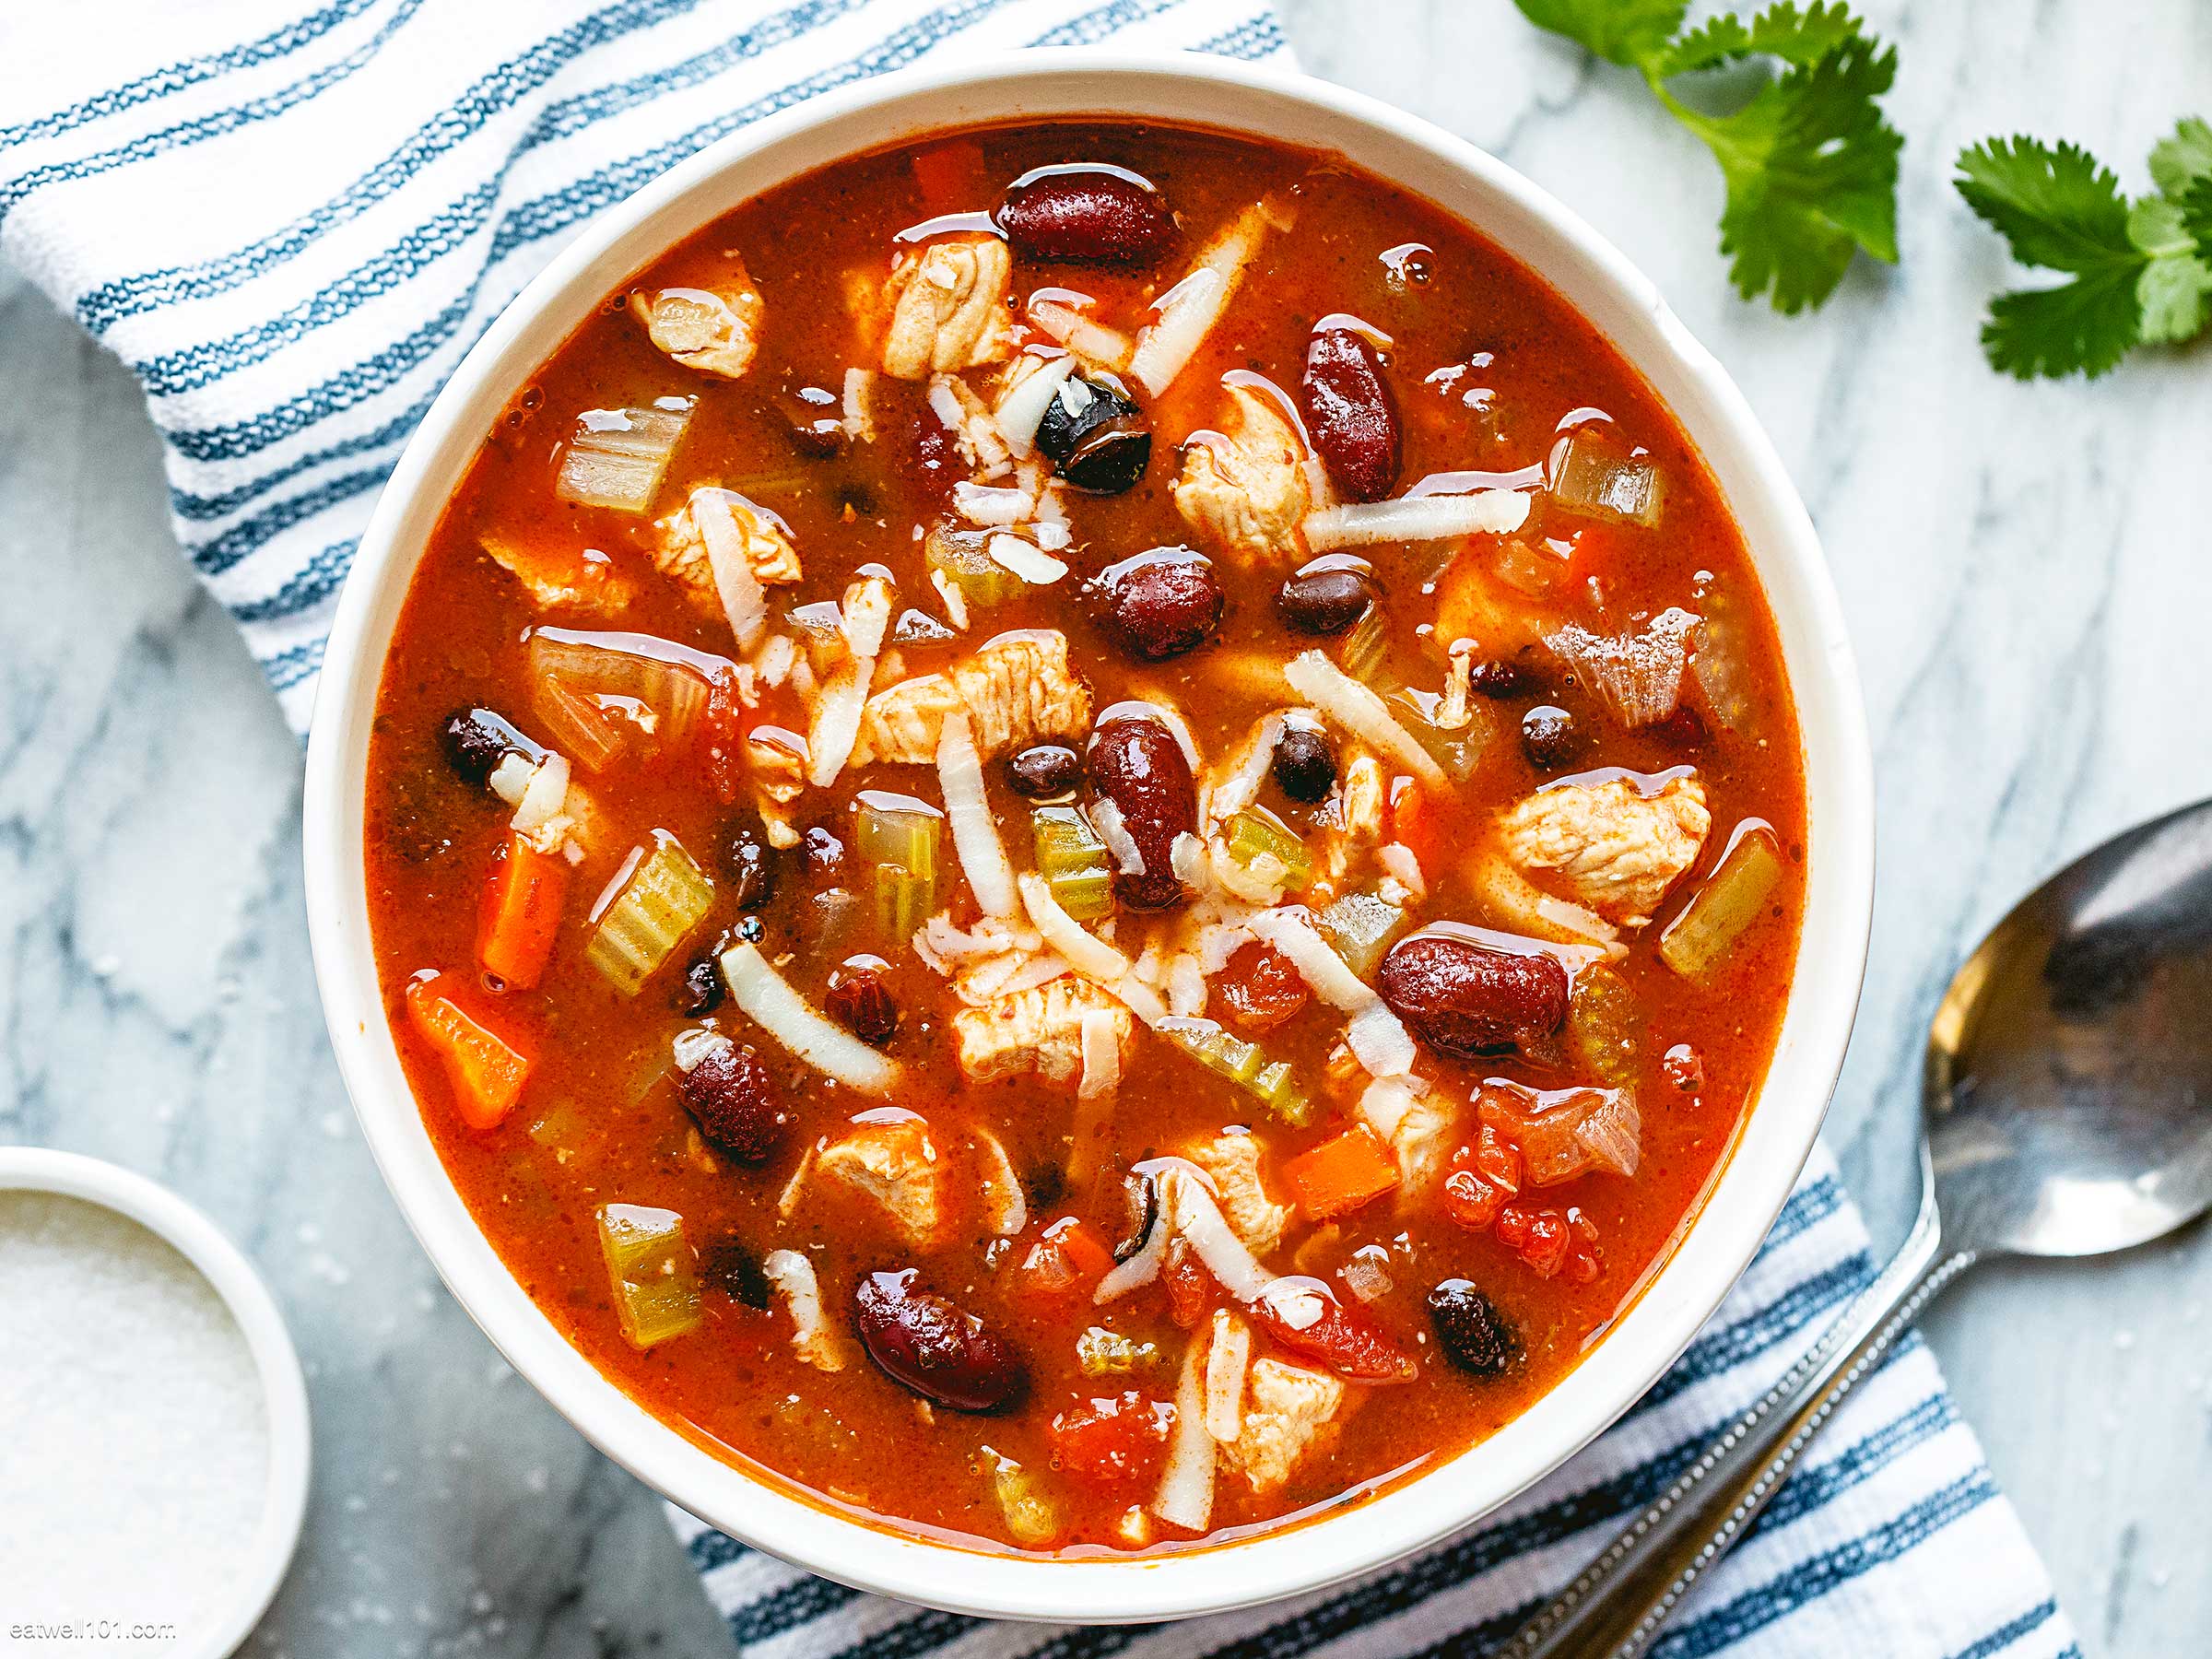 https://www.eatwell101.com/wp-content/uploads/2022/12/instant-pot-chicken-chili-soup-recipe-1.jpg